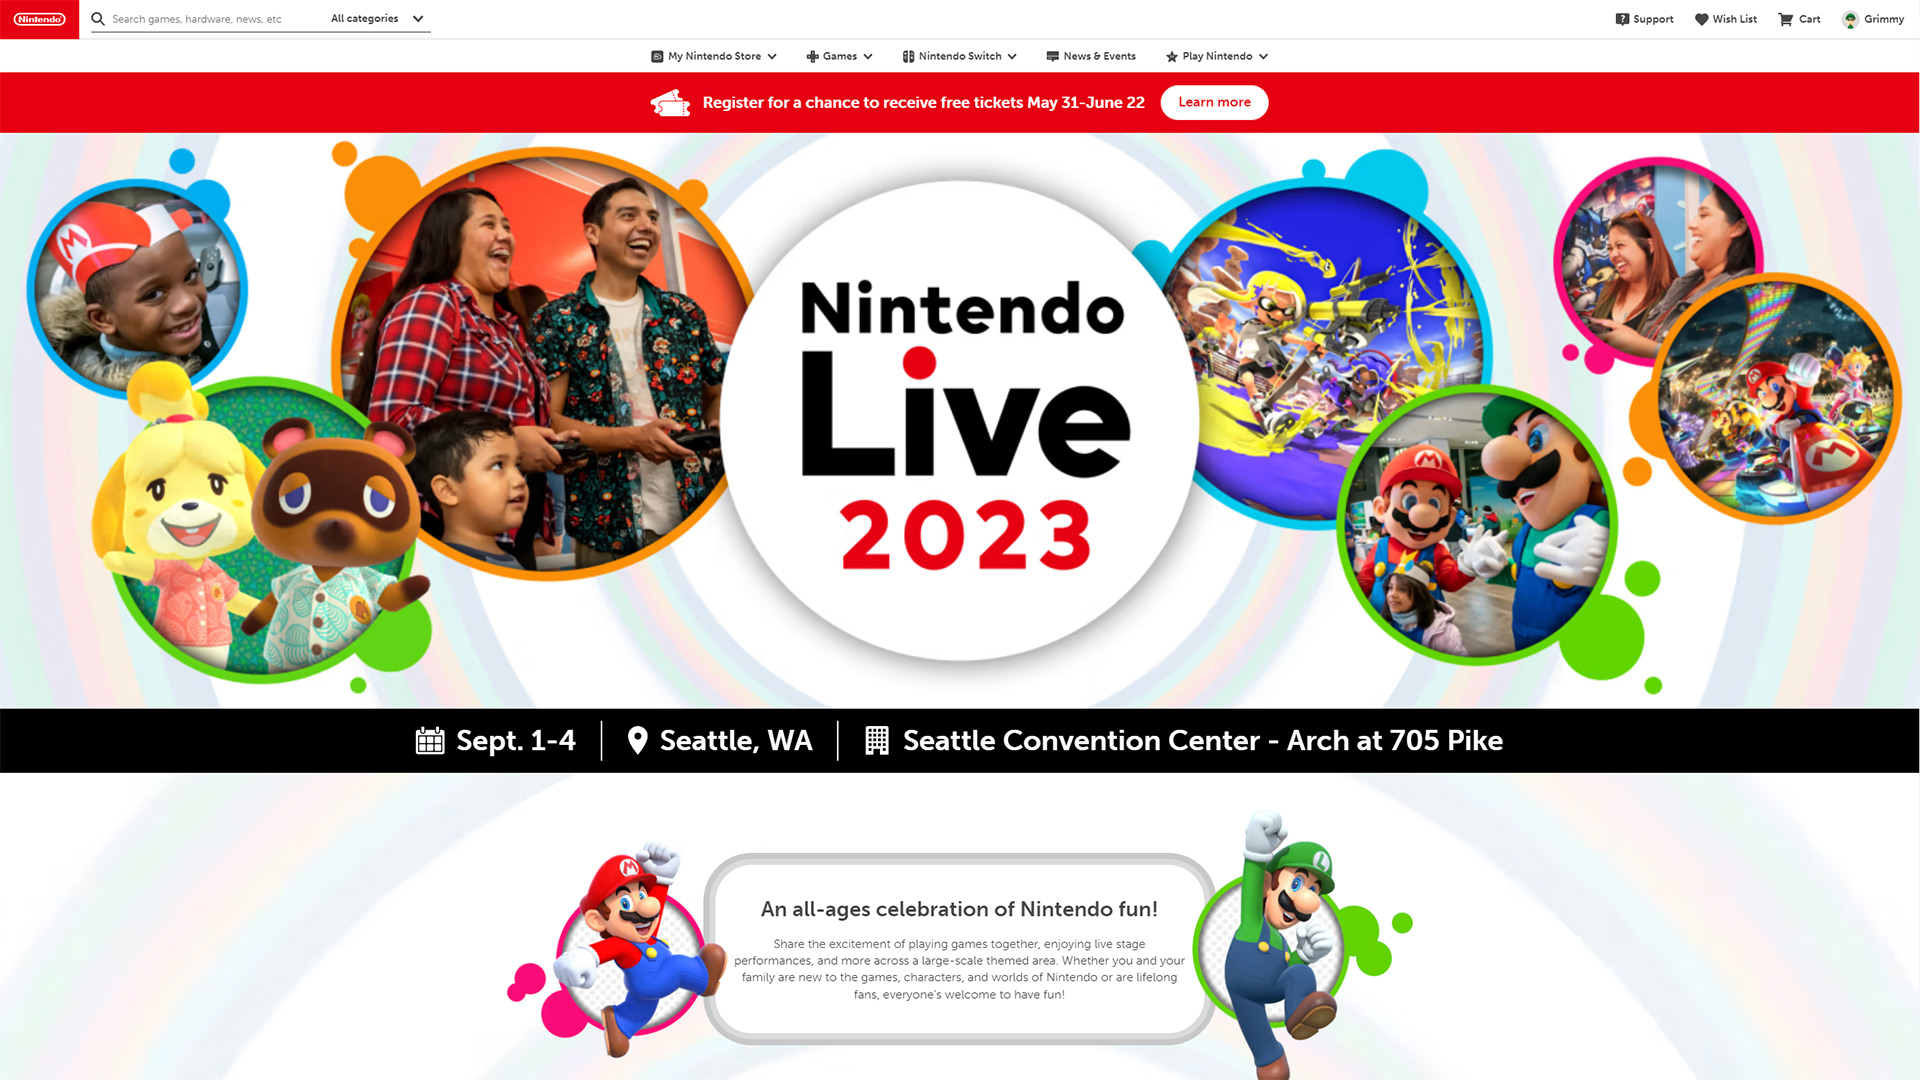 Nintendo Live 2023 Details